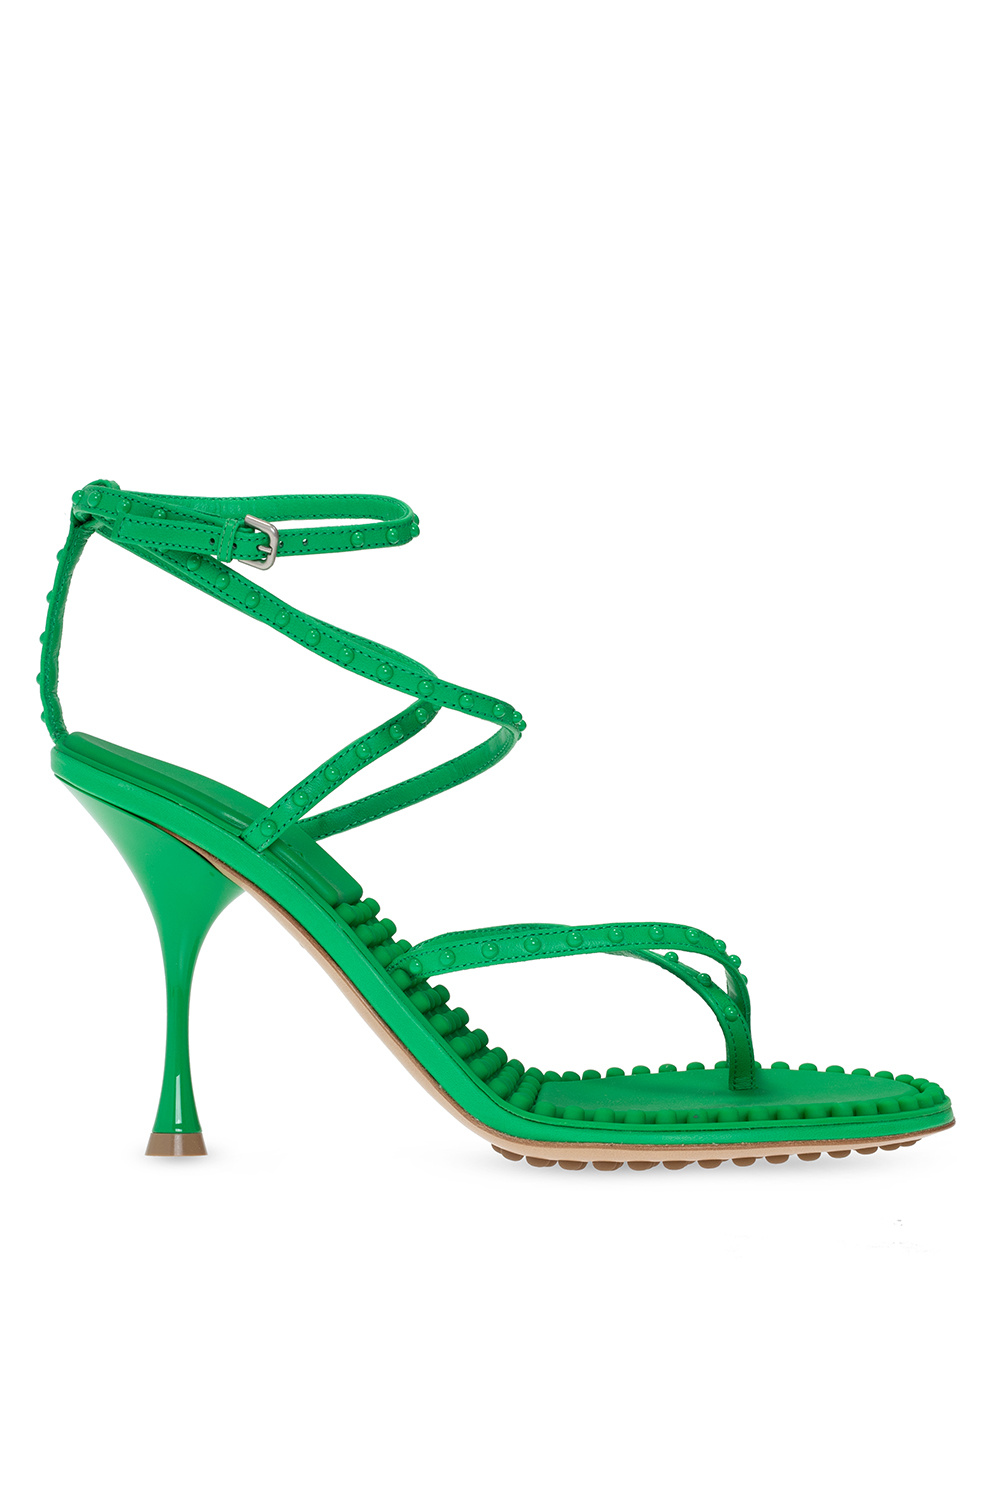 Bottega Veneta Heeled leather sandals | Women's Shoes | Vitkac